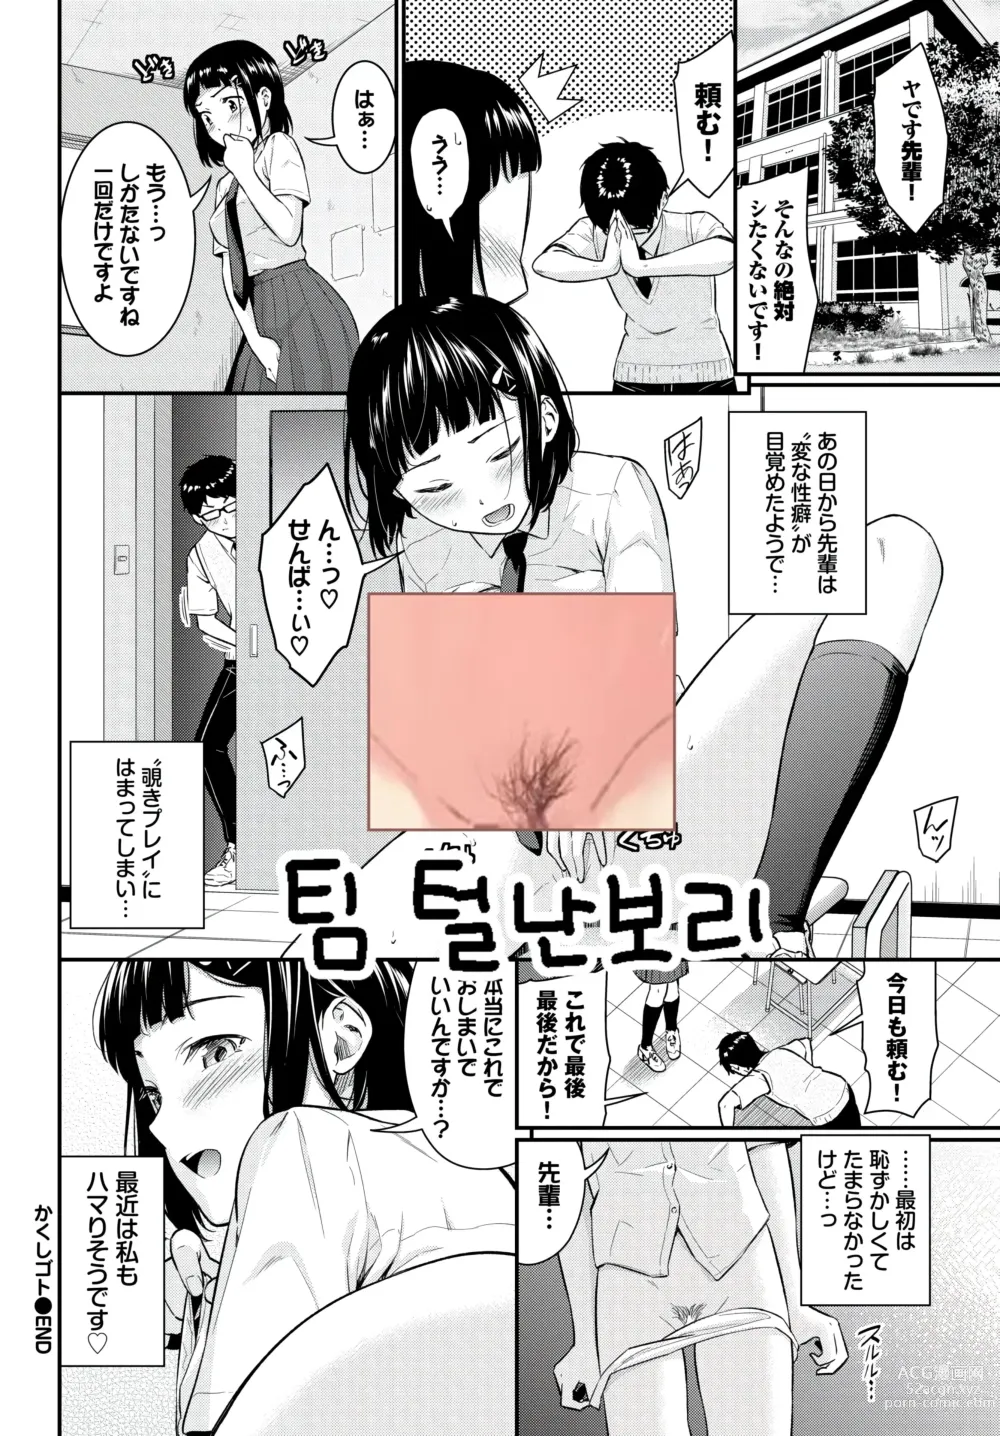 Page 21 of manga Kakushigoto